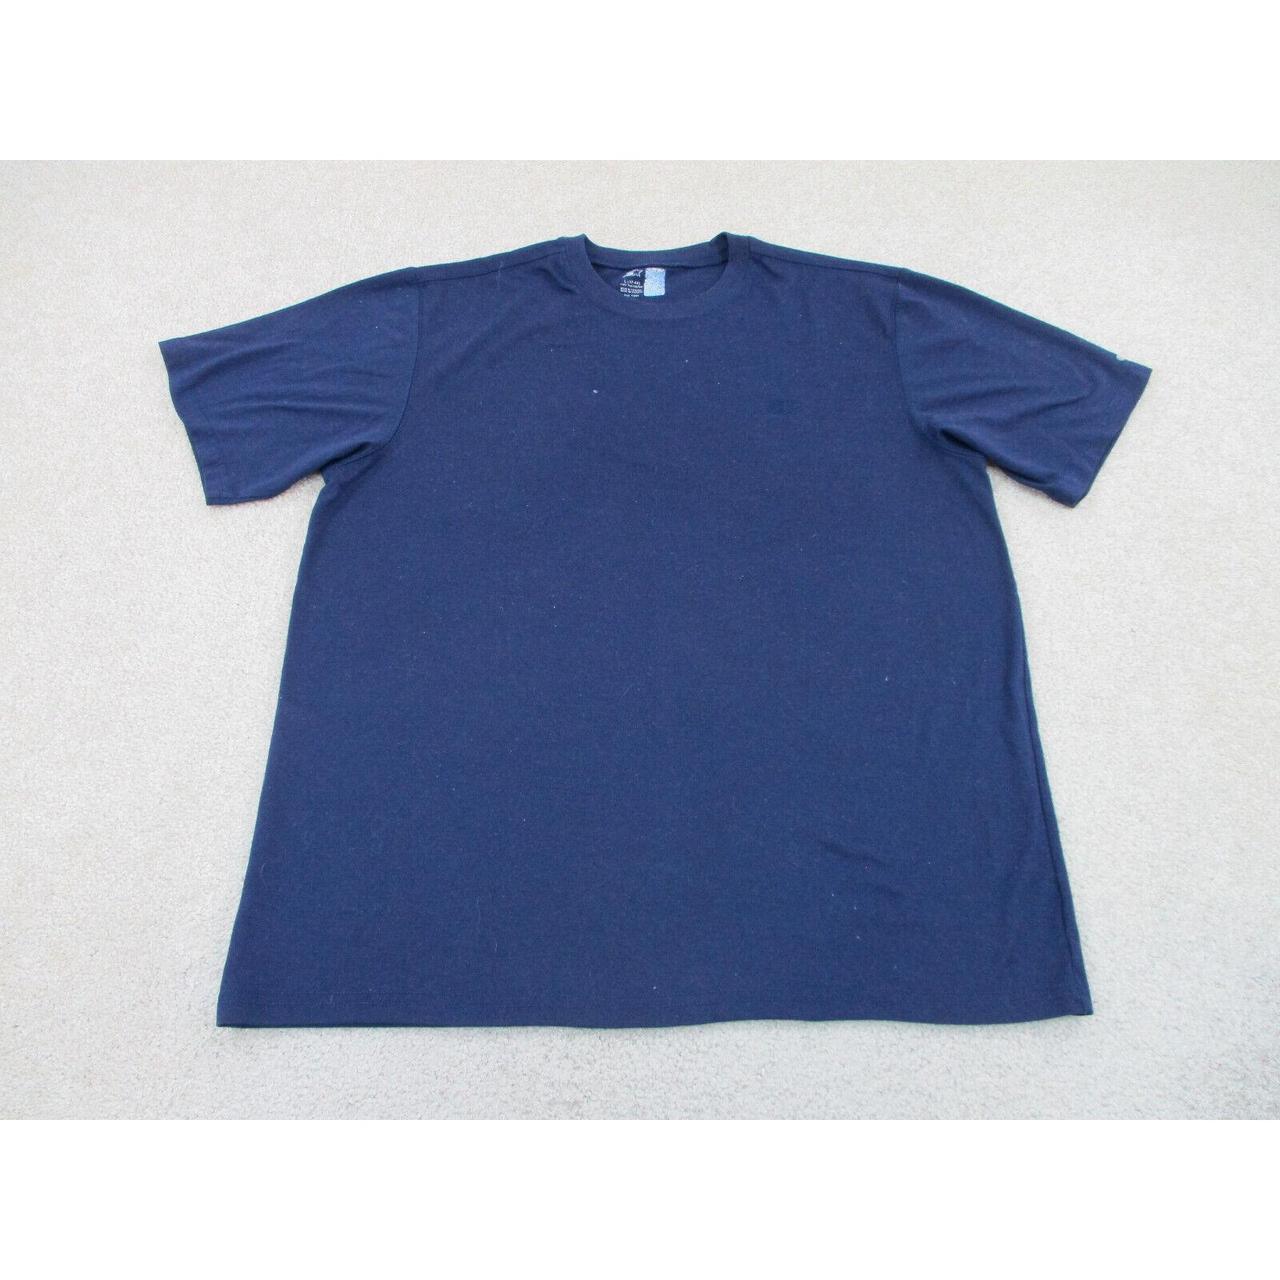 Starter Men's Shirt - Blue - L